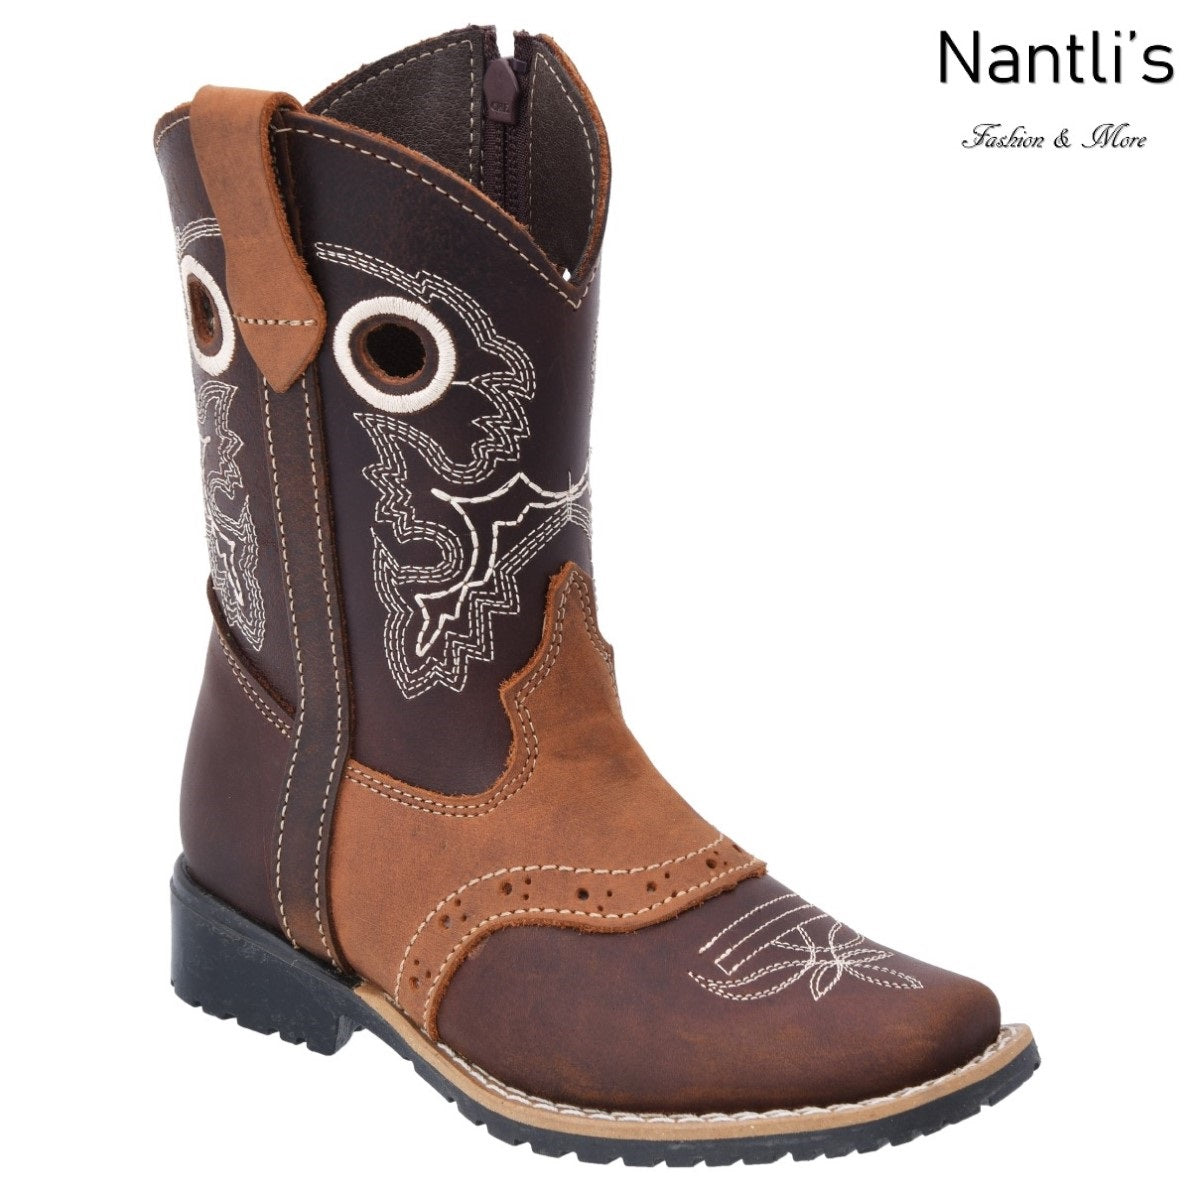 Botas vaqueras para ninos - Kids Western Boots – Nantli's - Online Store | Footwear, Clothing and Accessories